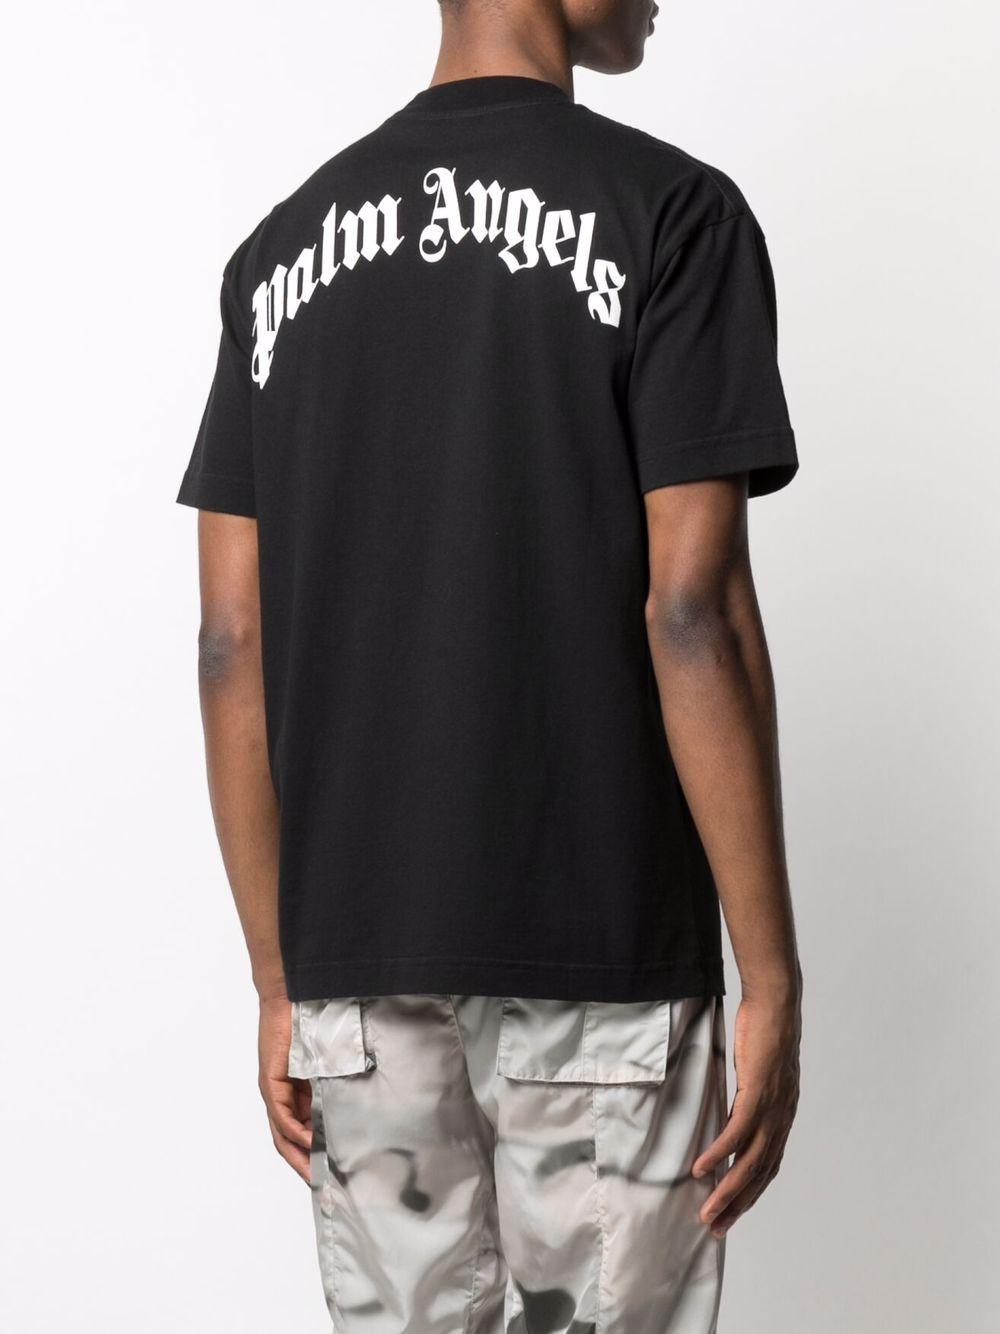 Palm angels T-shirt’s